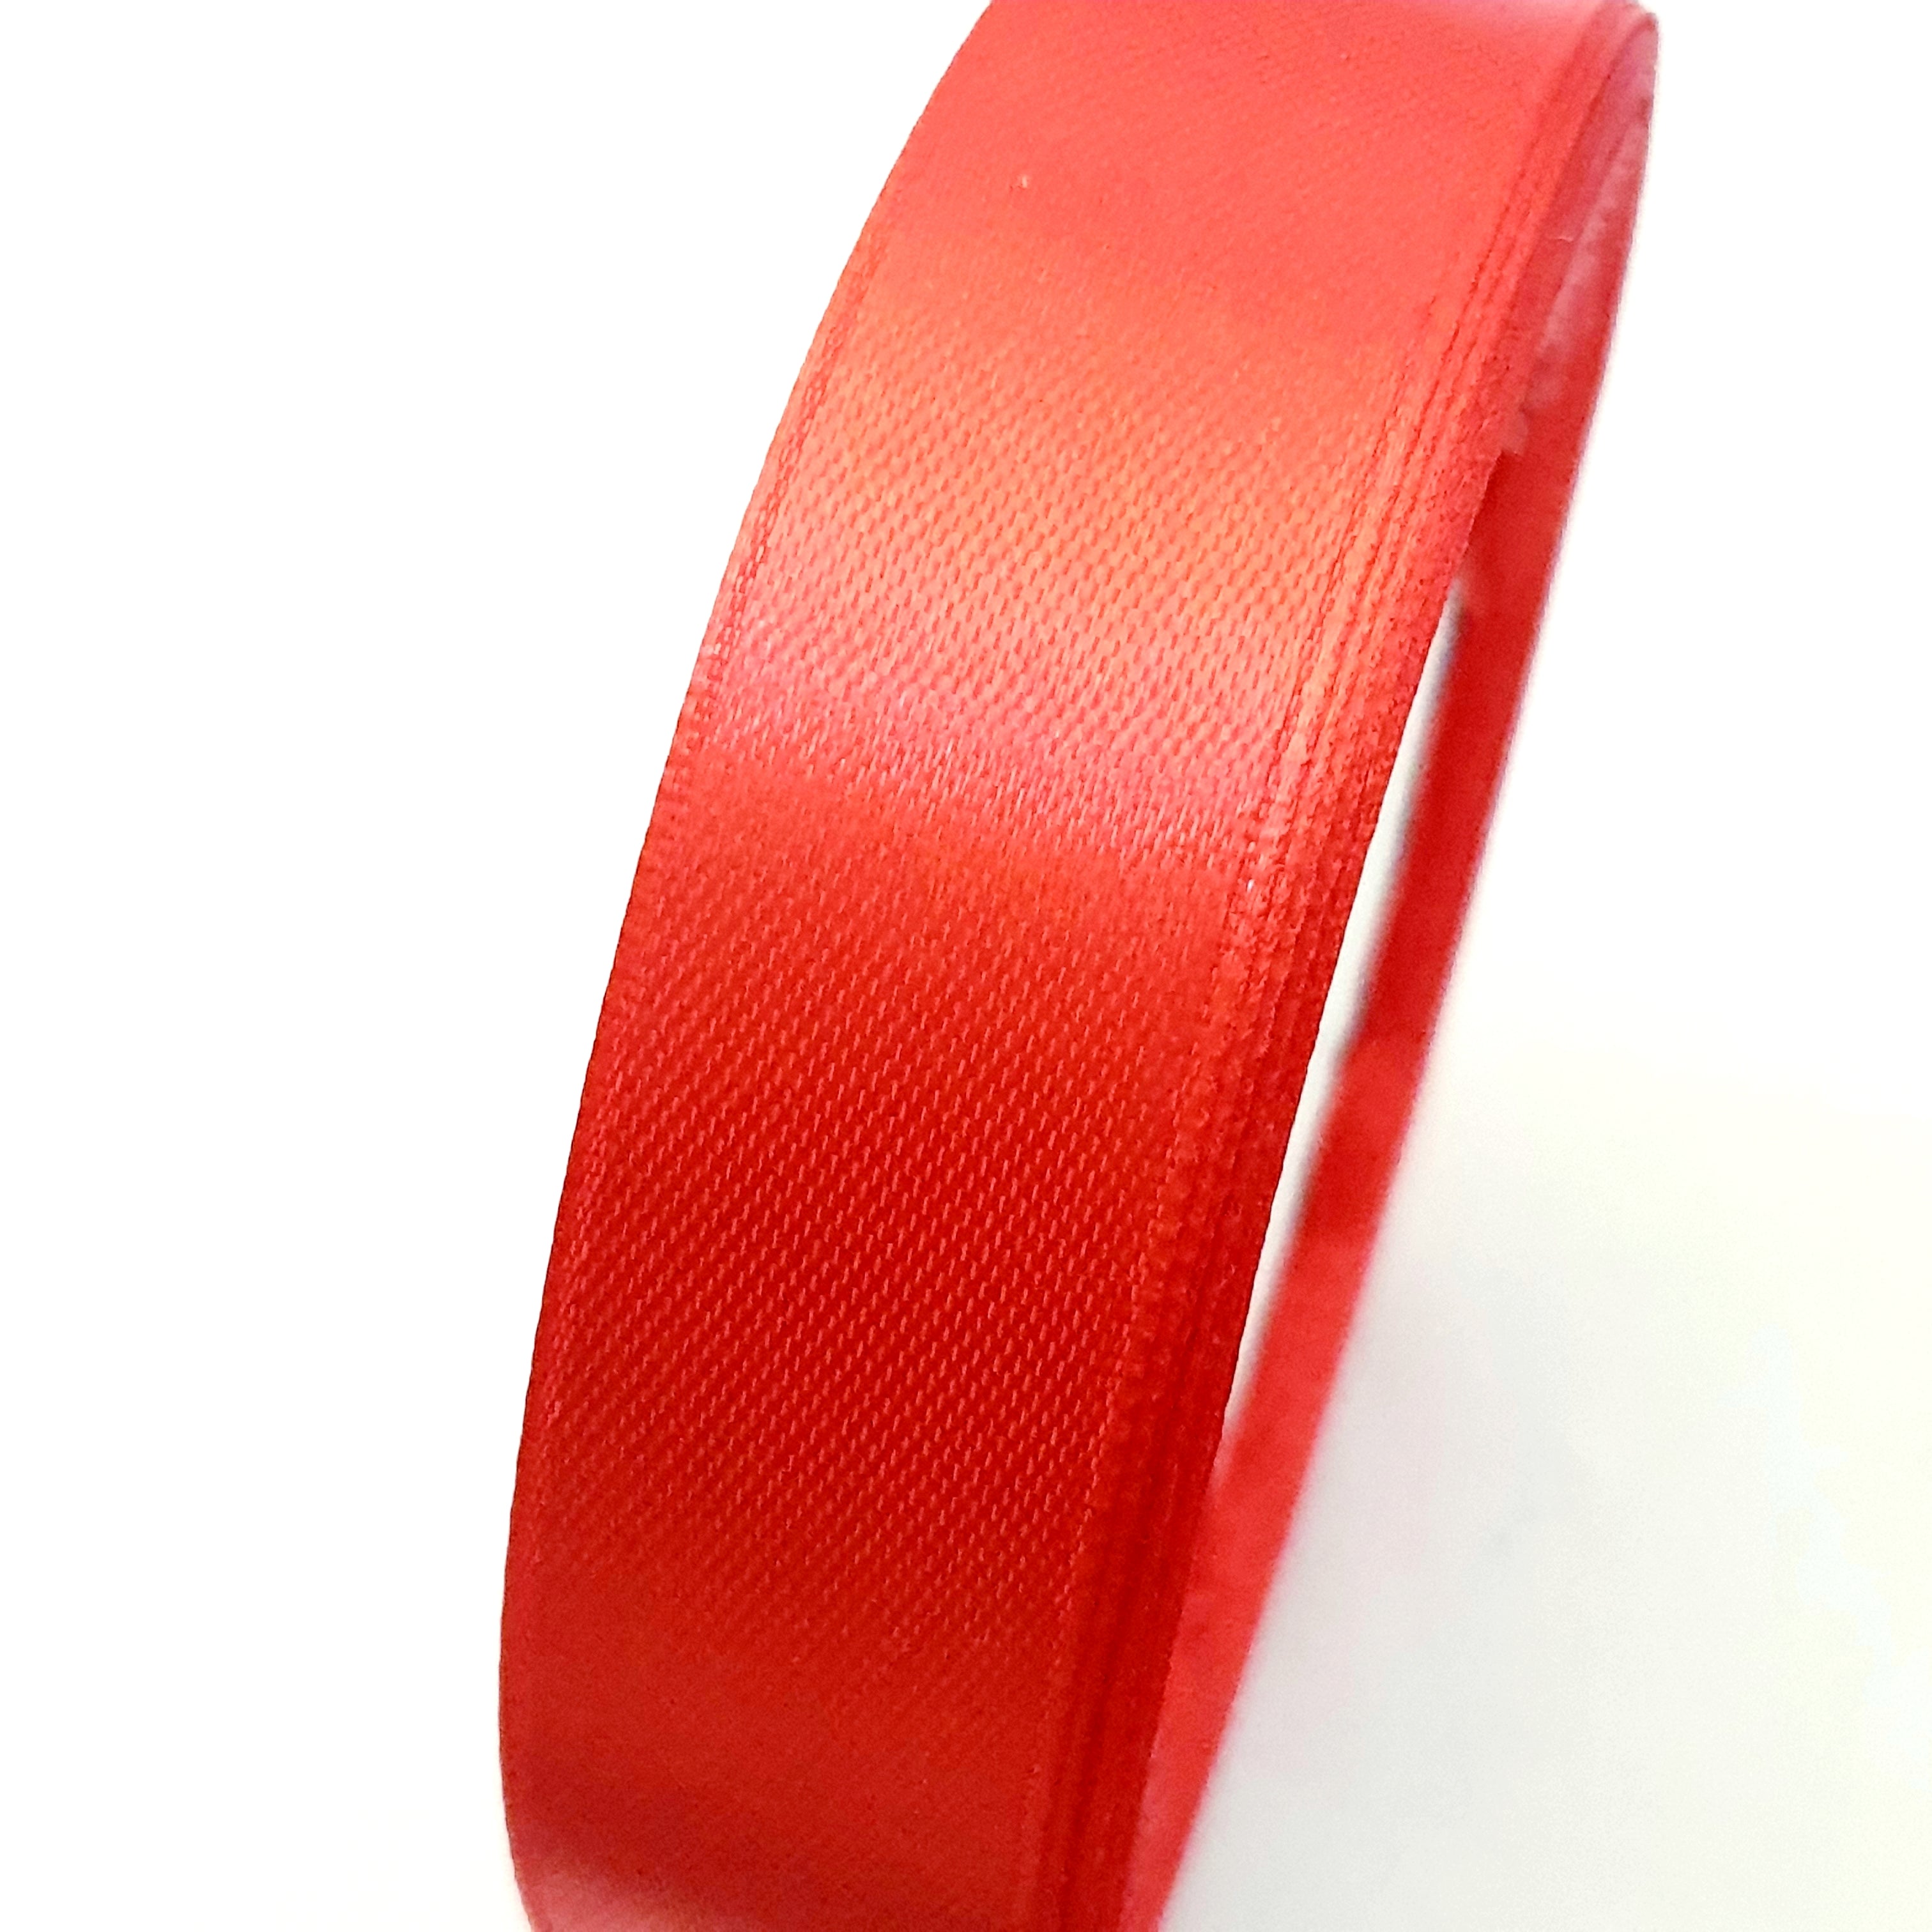 MajorCrafts 20mm 22metres Crimson Red Single Sided Satin Fabric Ribbon Roll R26